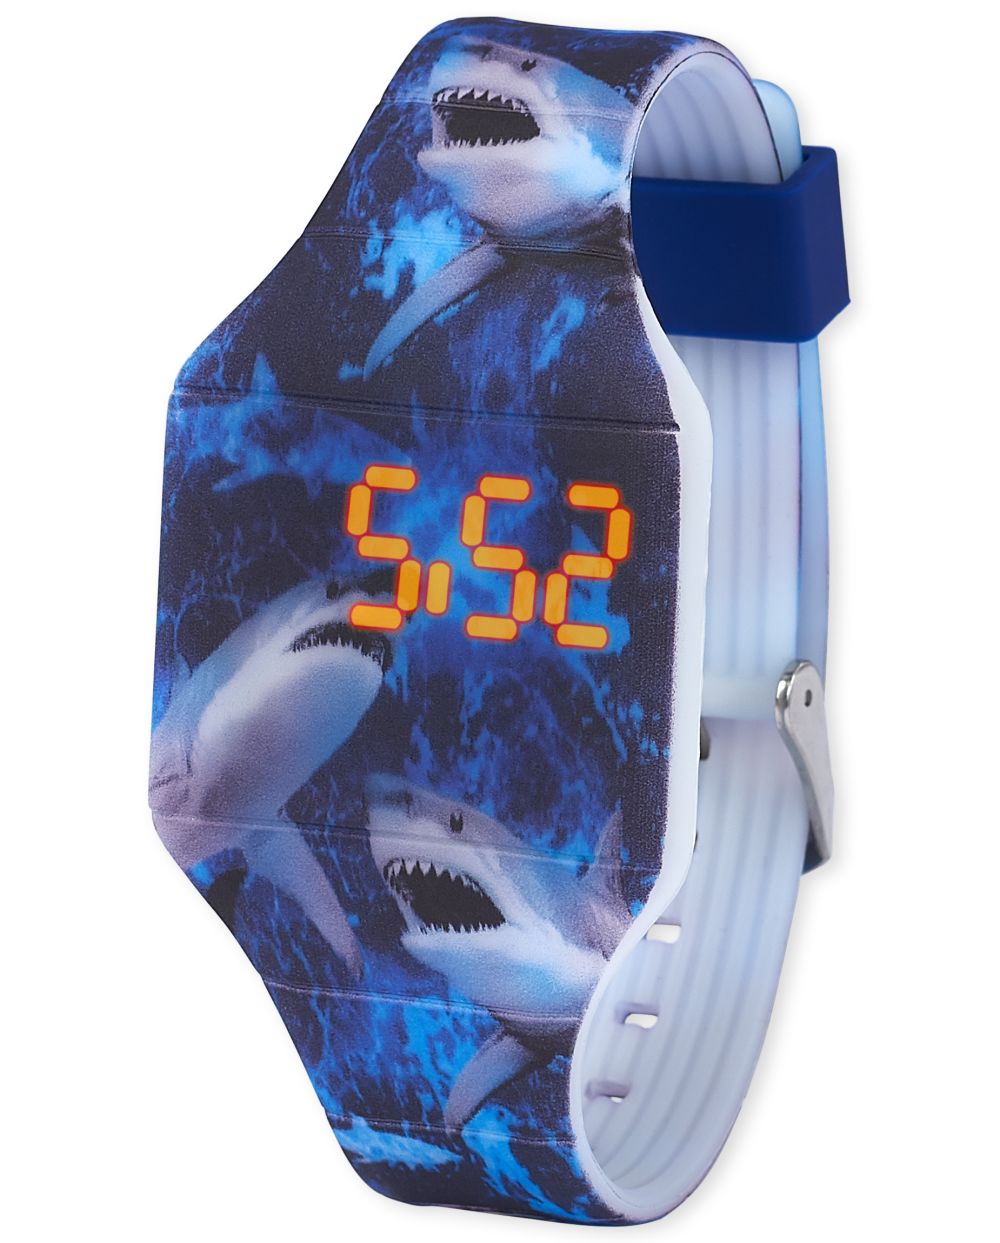 Boys Shark Digital Watch